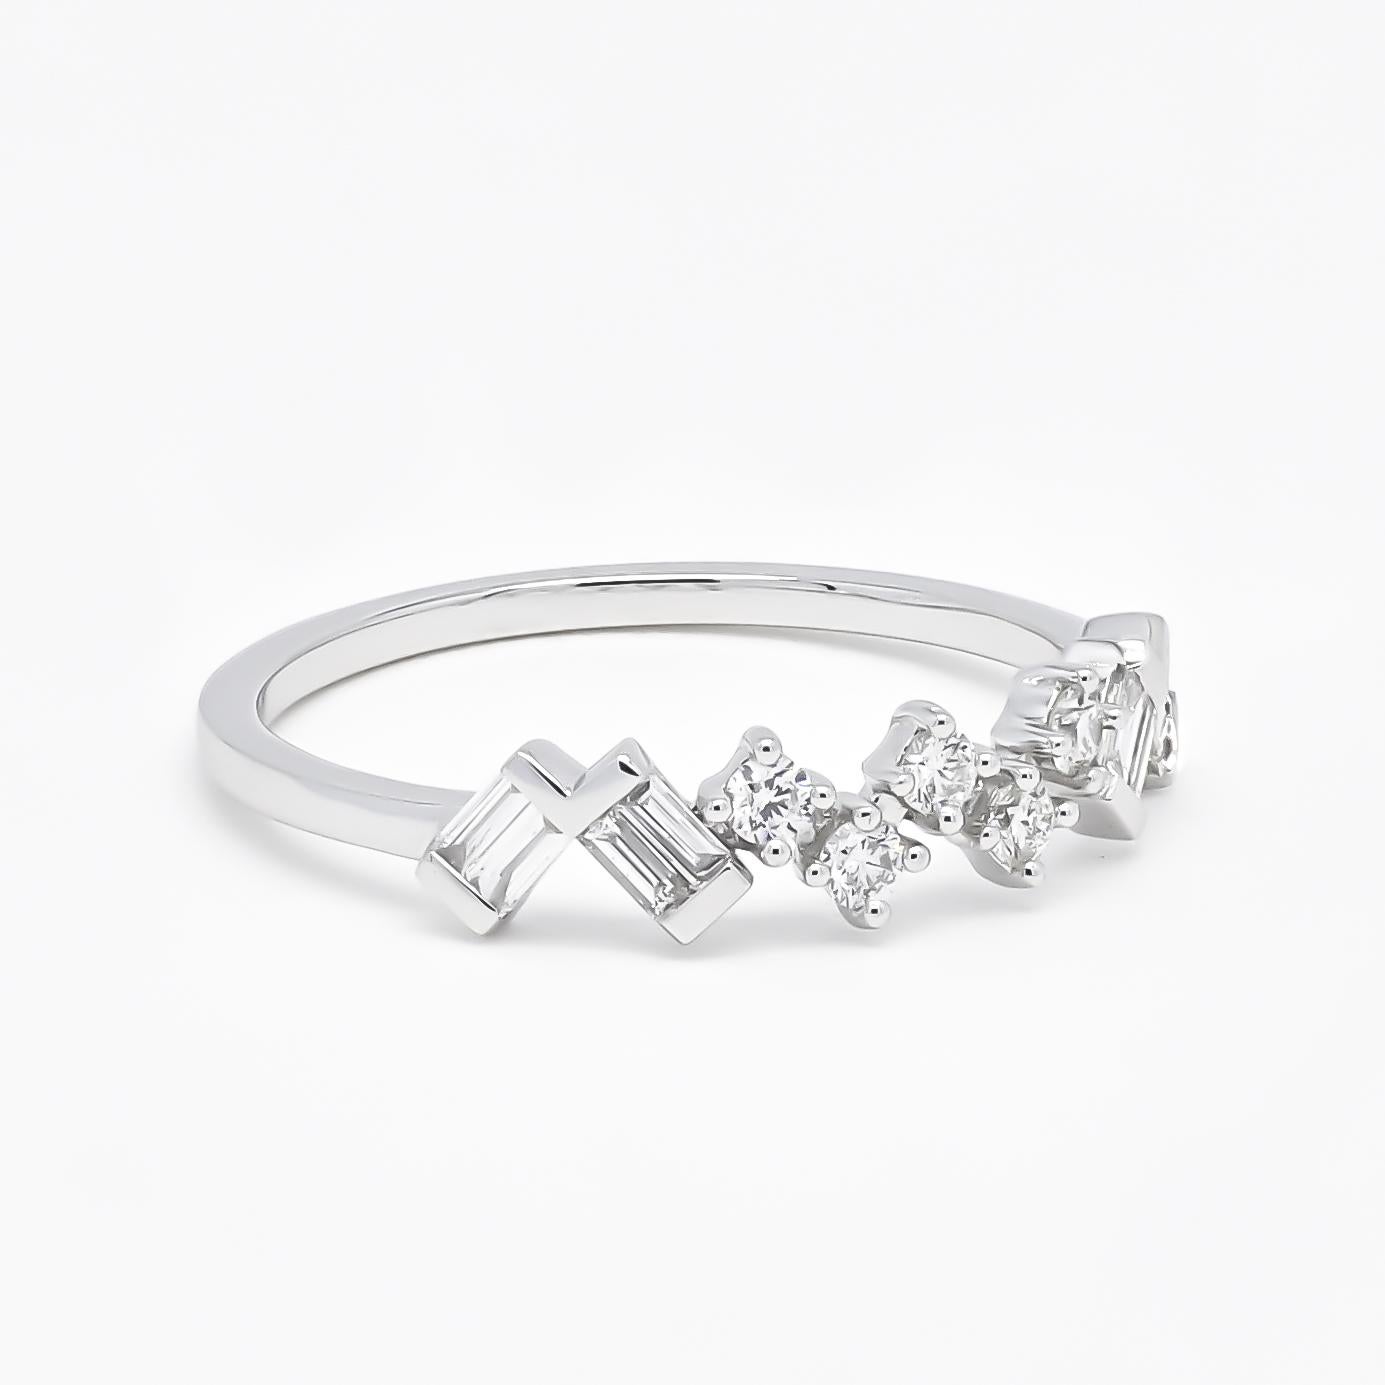 For Sale:  Natural Diamond Ring 18k White Gold Single Row Ring, Minimalistic Diamond Ring 3